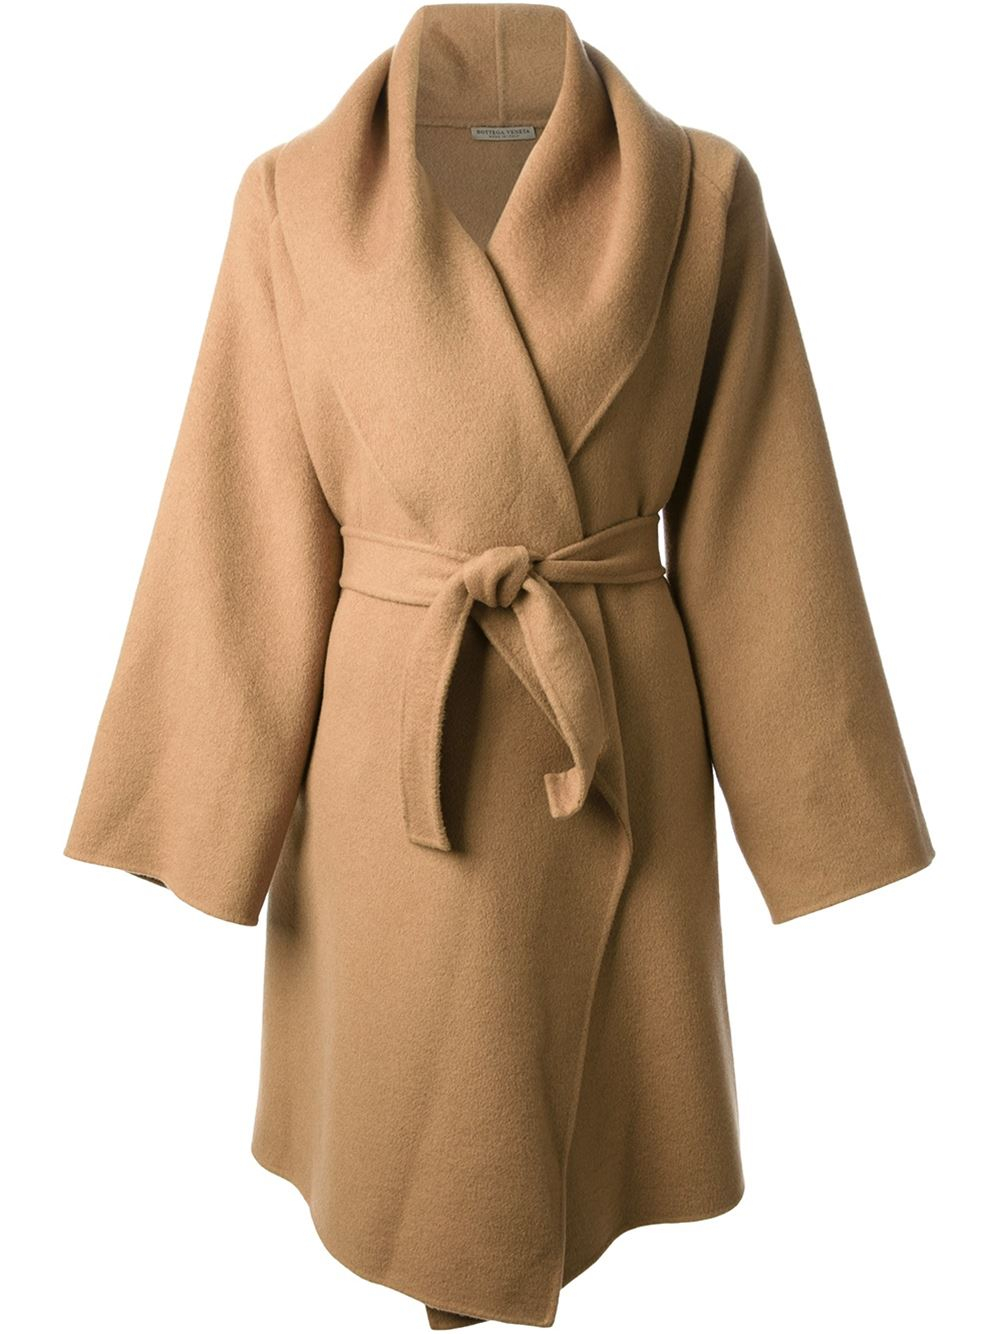 Lyst - Bottega Veneta Belted Coat in Brown